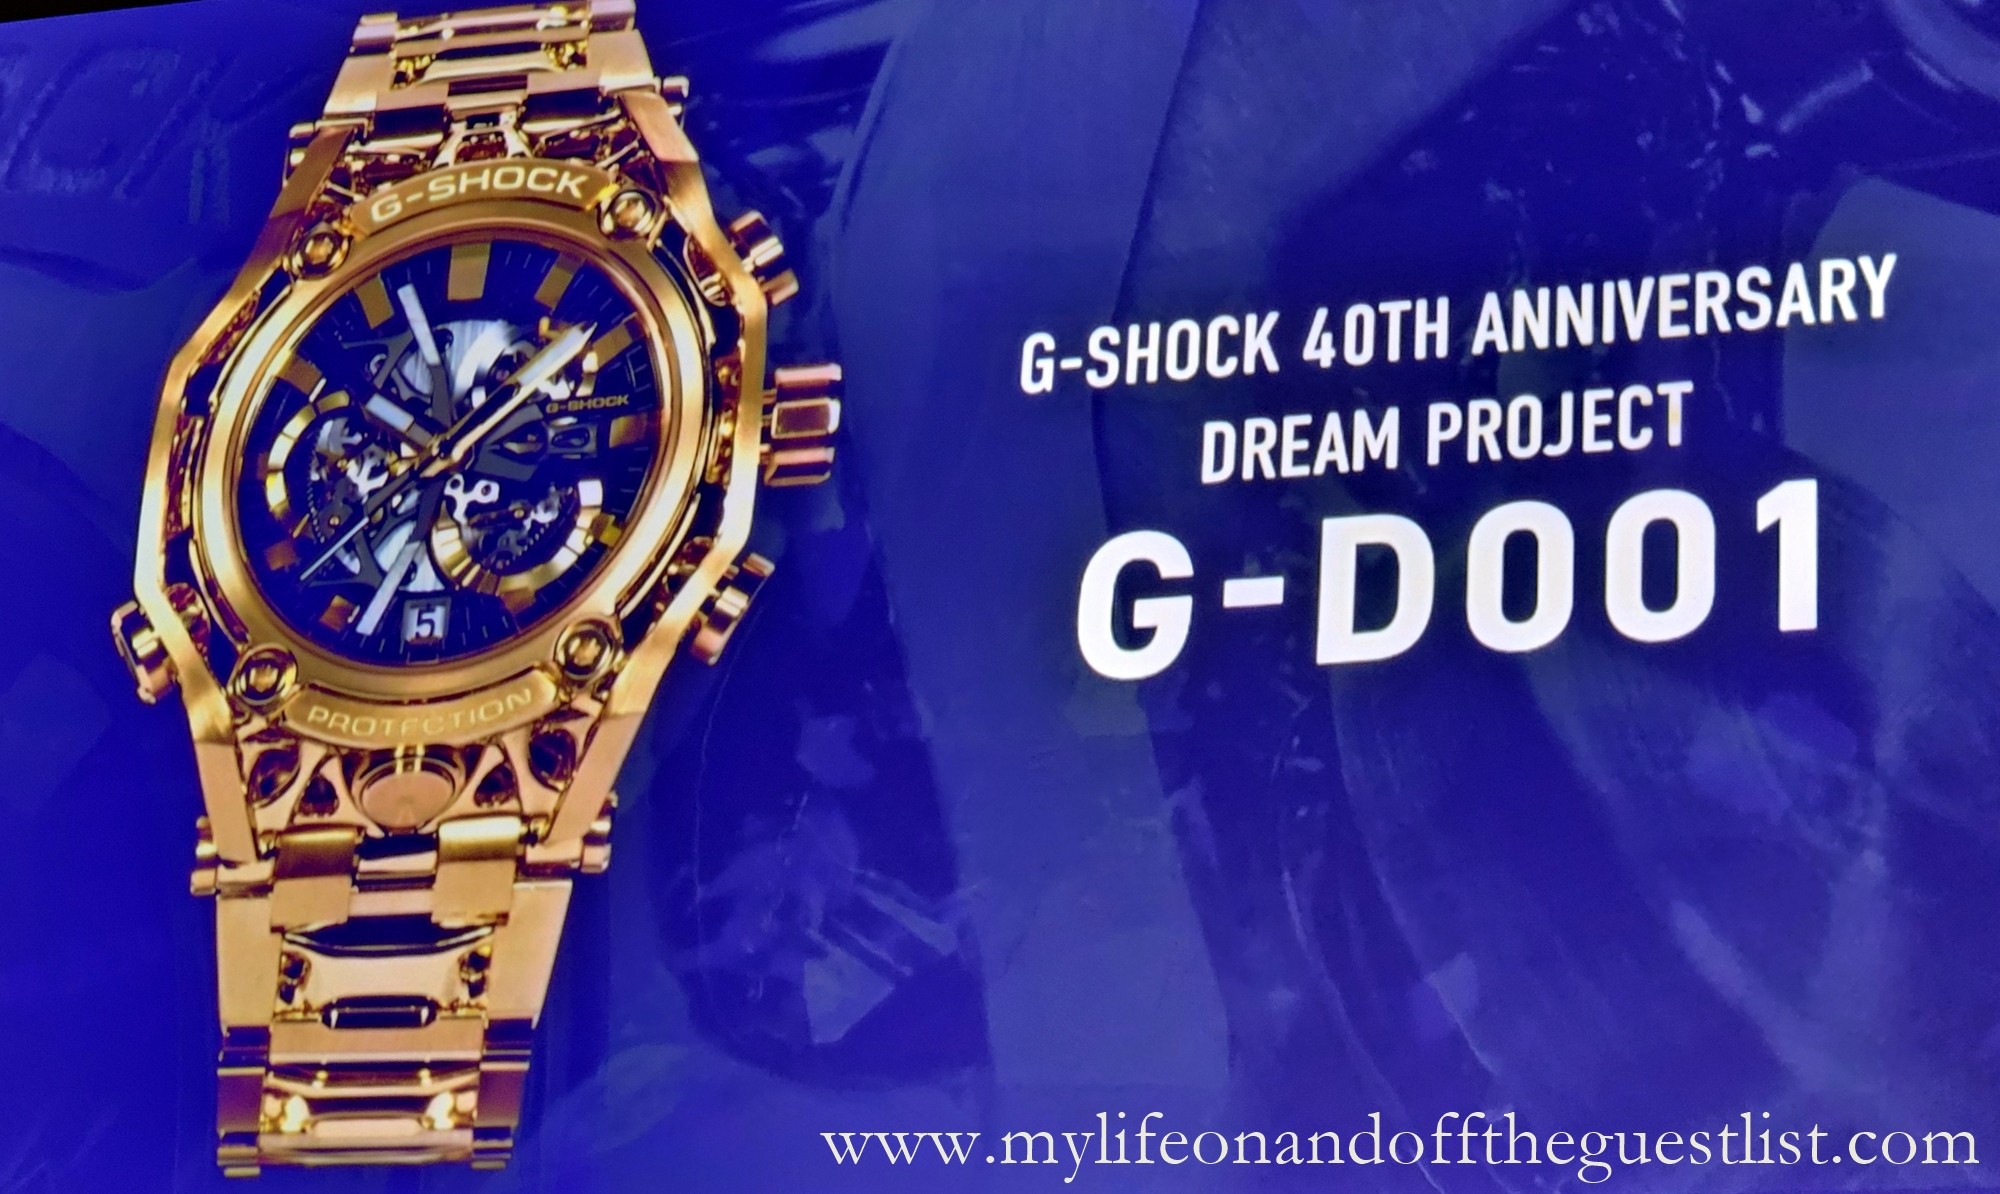 G-SHOCK's 40th Anniversary Celebration with J Balvin